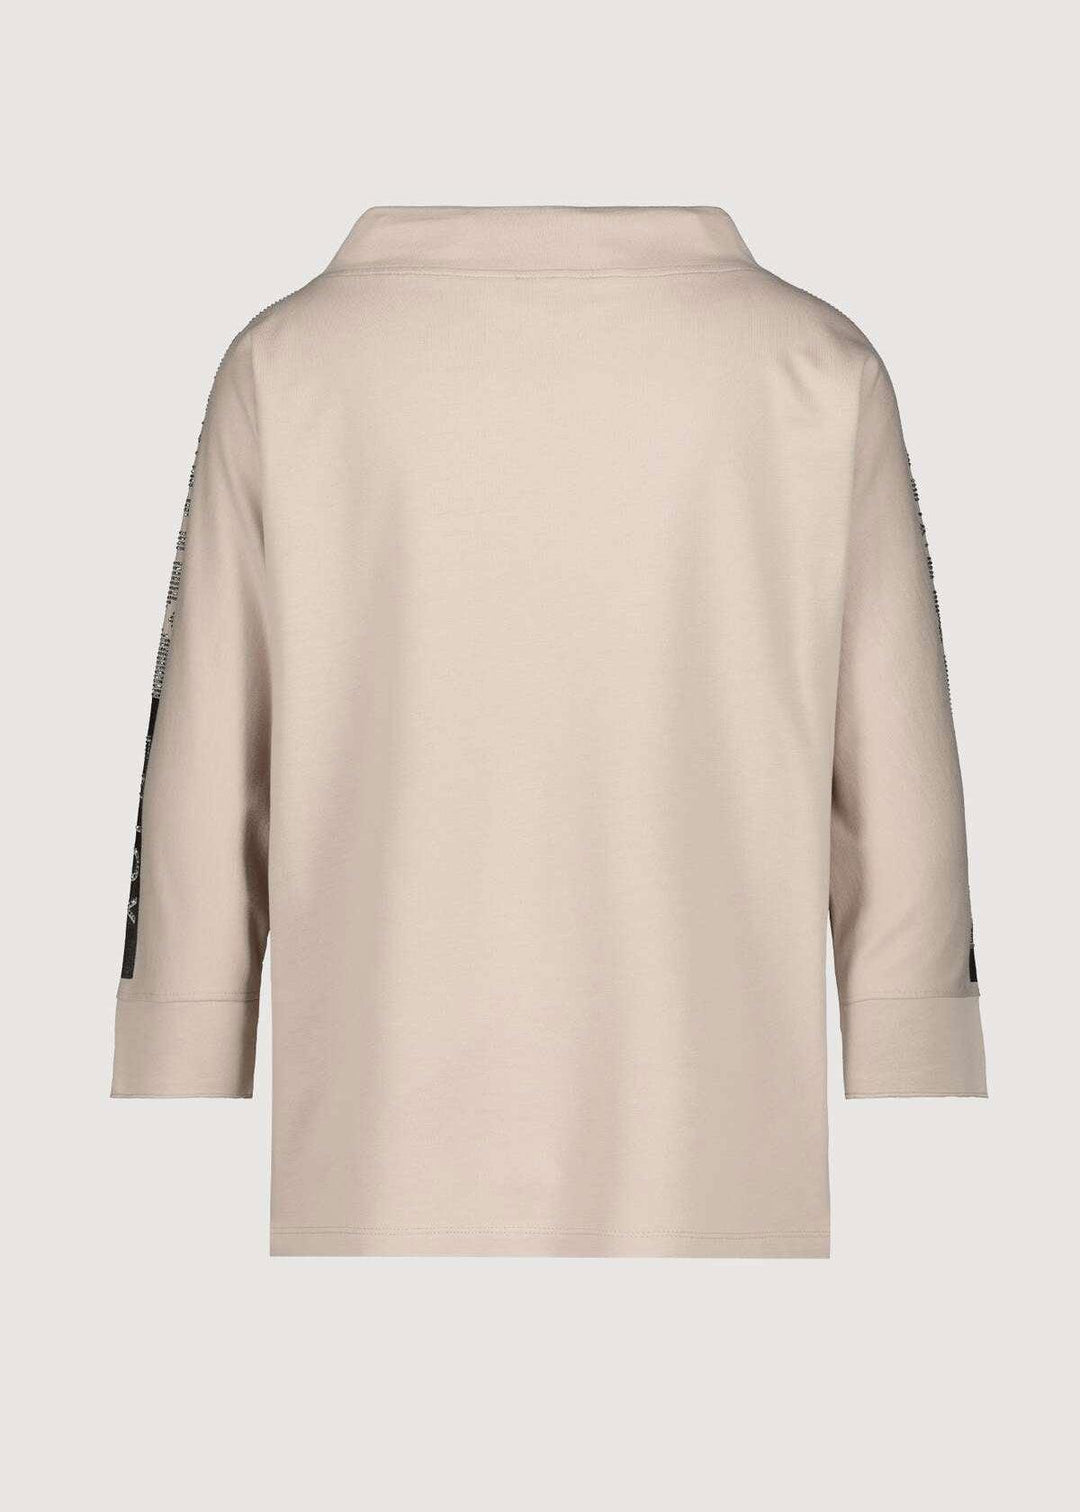 Monari Sparkle Sleeve Top - Justina Clothing